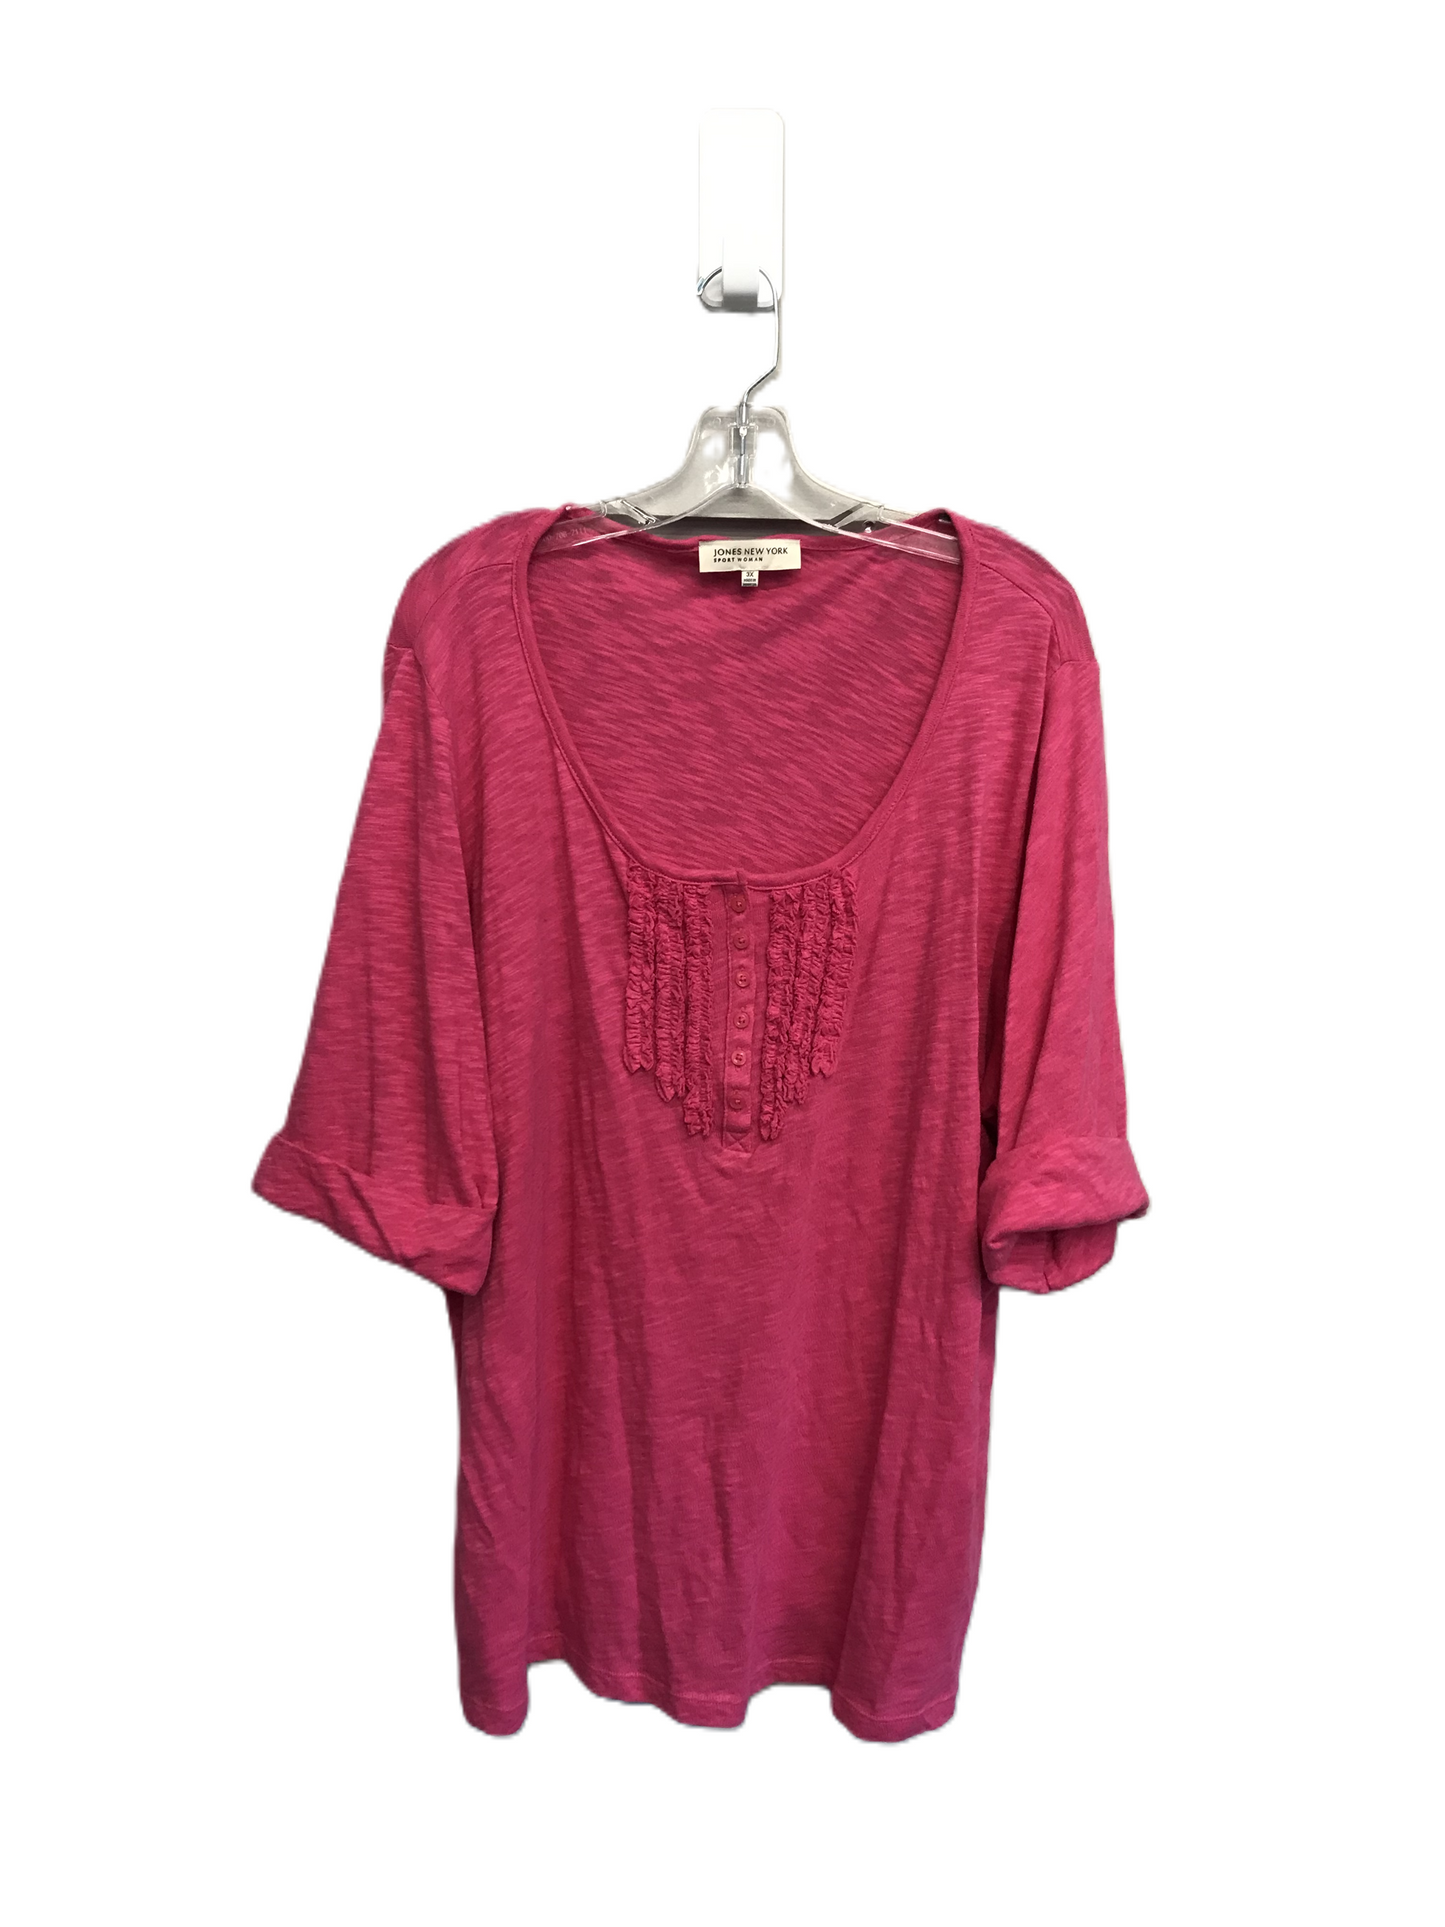 Pink Top Short Sleeve By Jones New York, Size: 3x